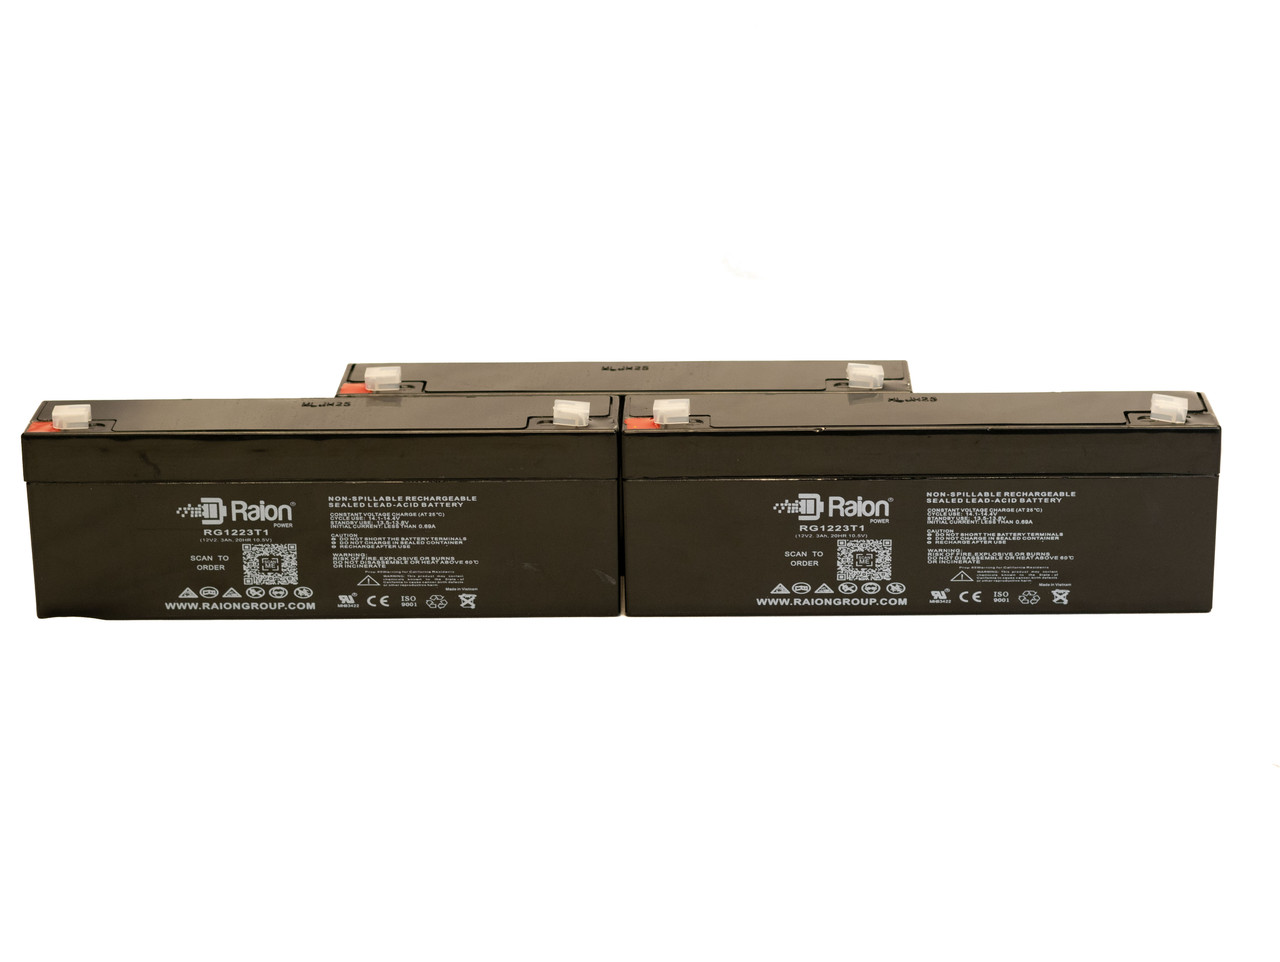 Raion Power 12V 2.3Ah RG1223T1 Compatible Replacement Battery for Douglas DG121.8 - 3 Pack